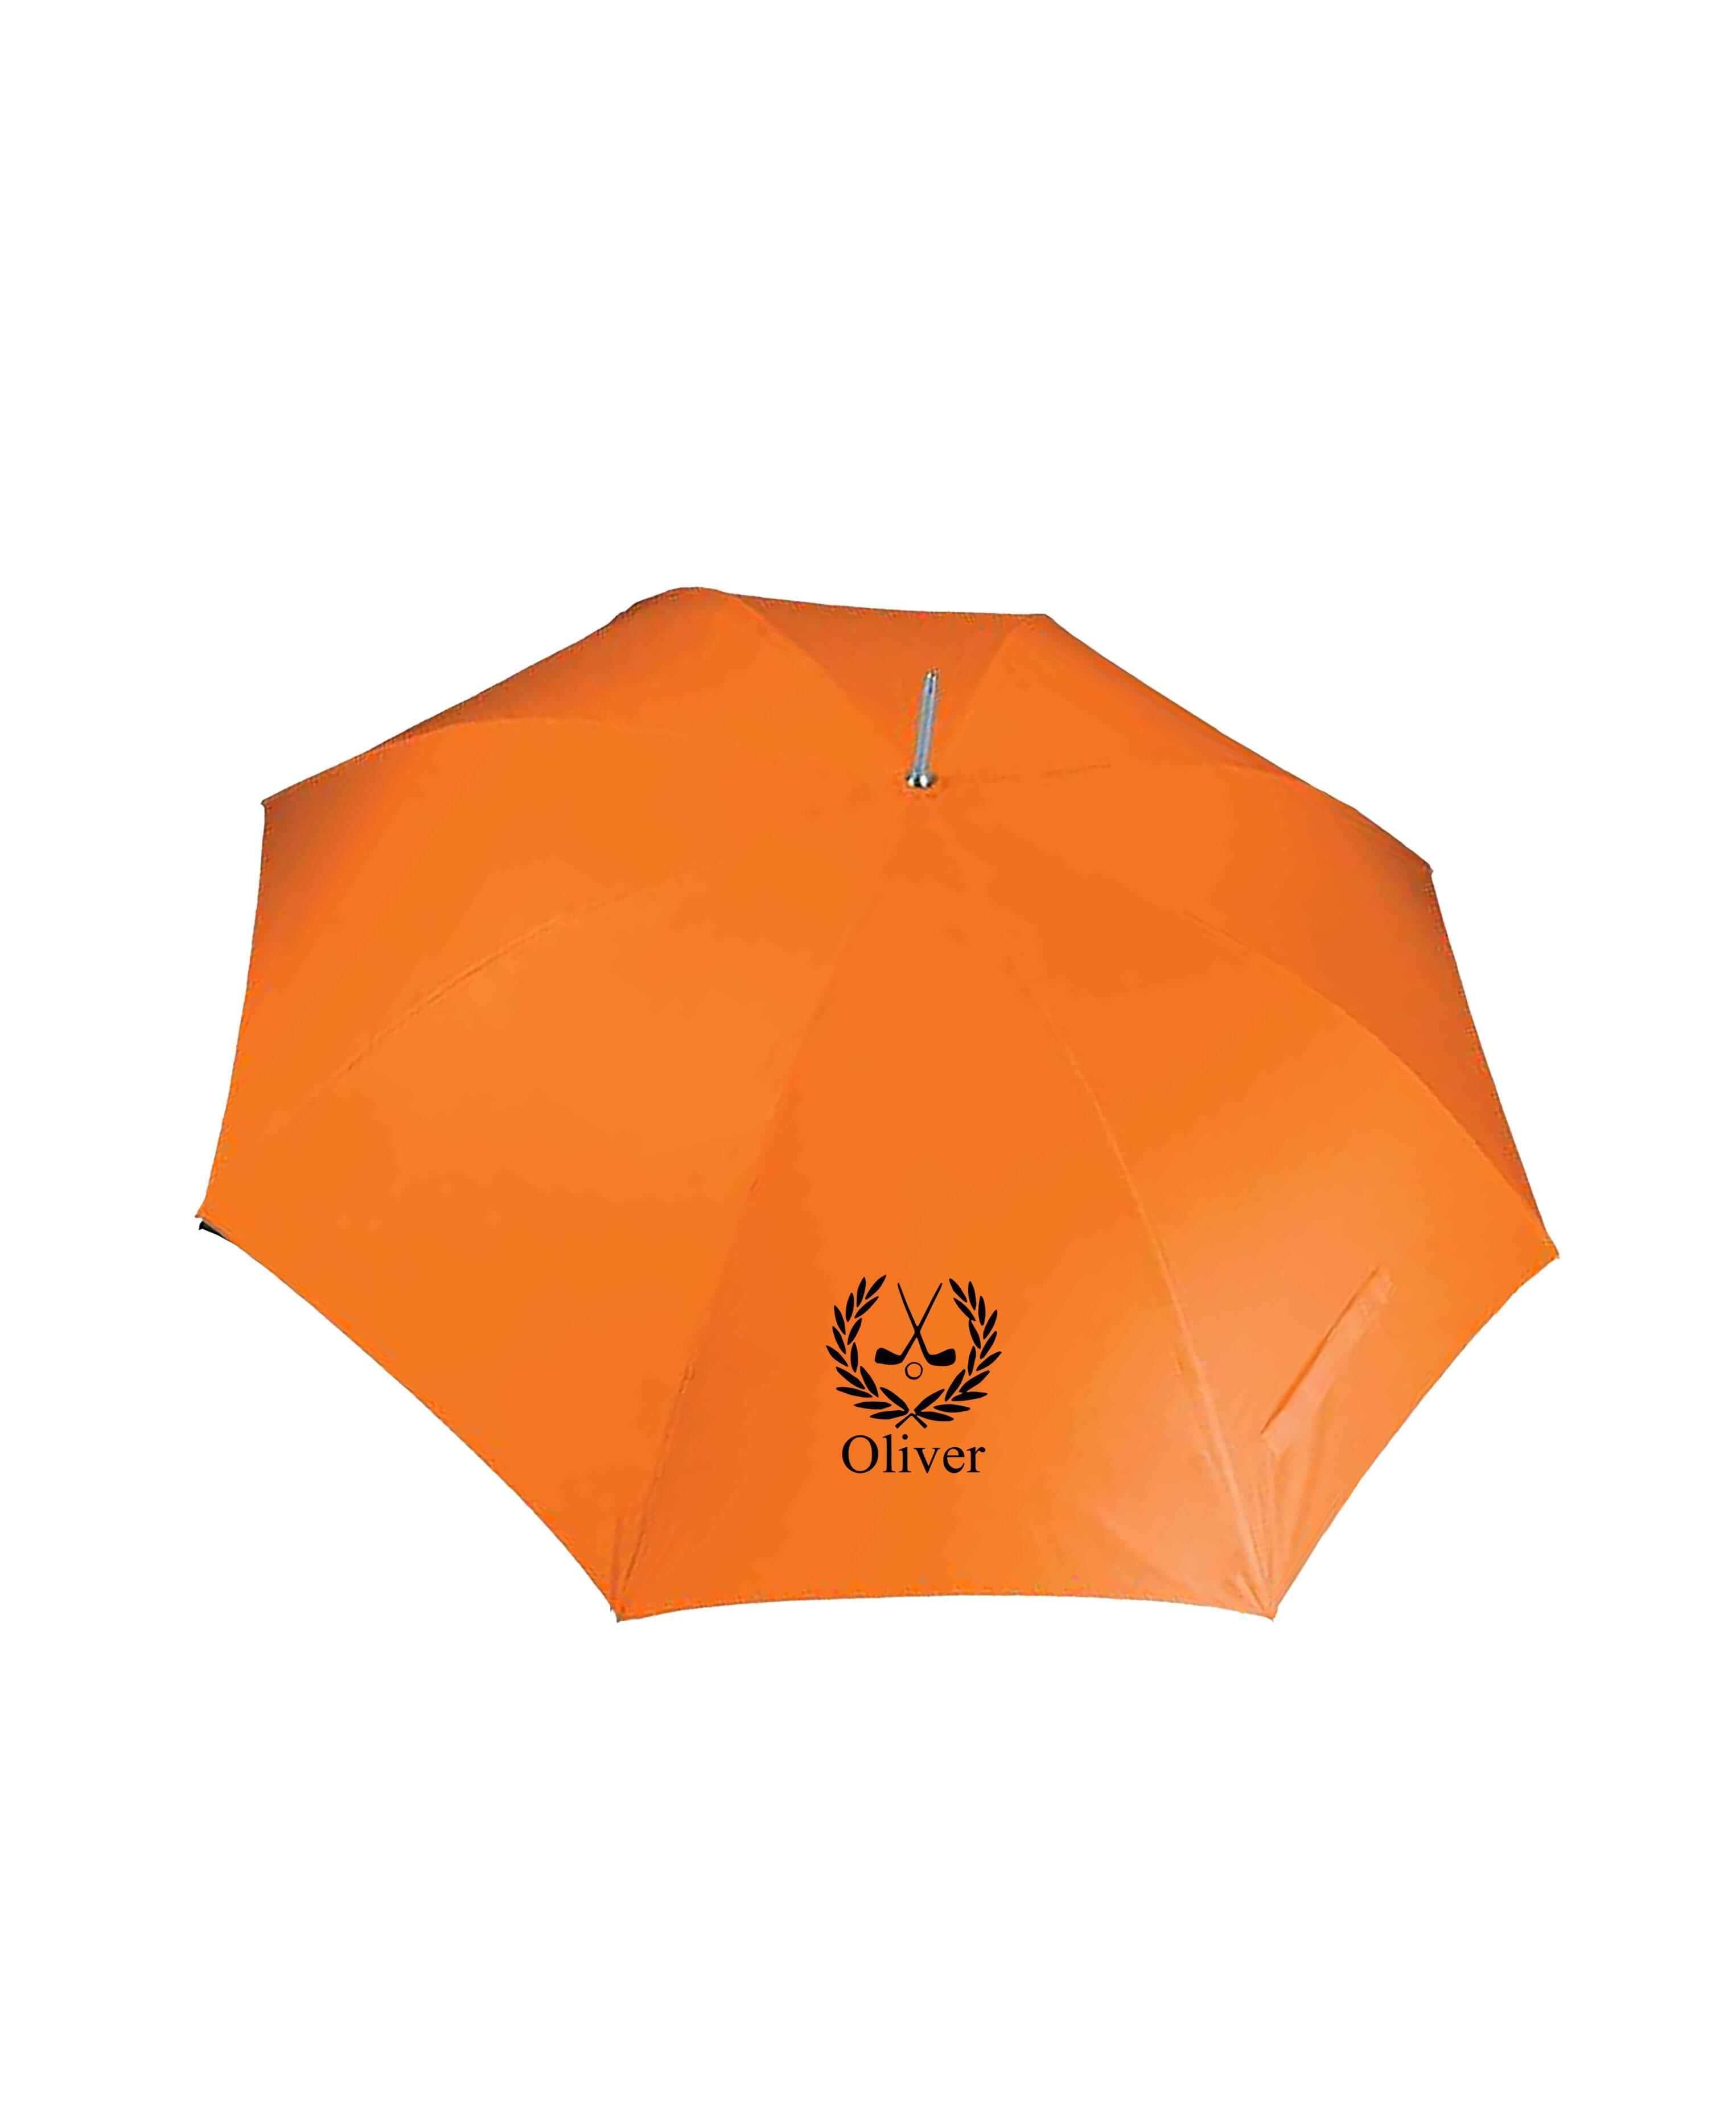 Personalised Large Golf Umbrella Orange